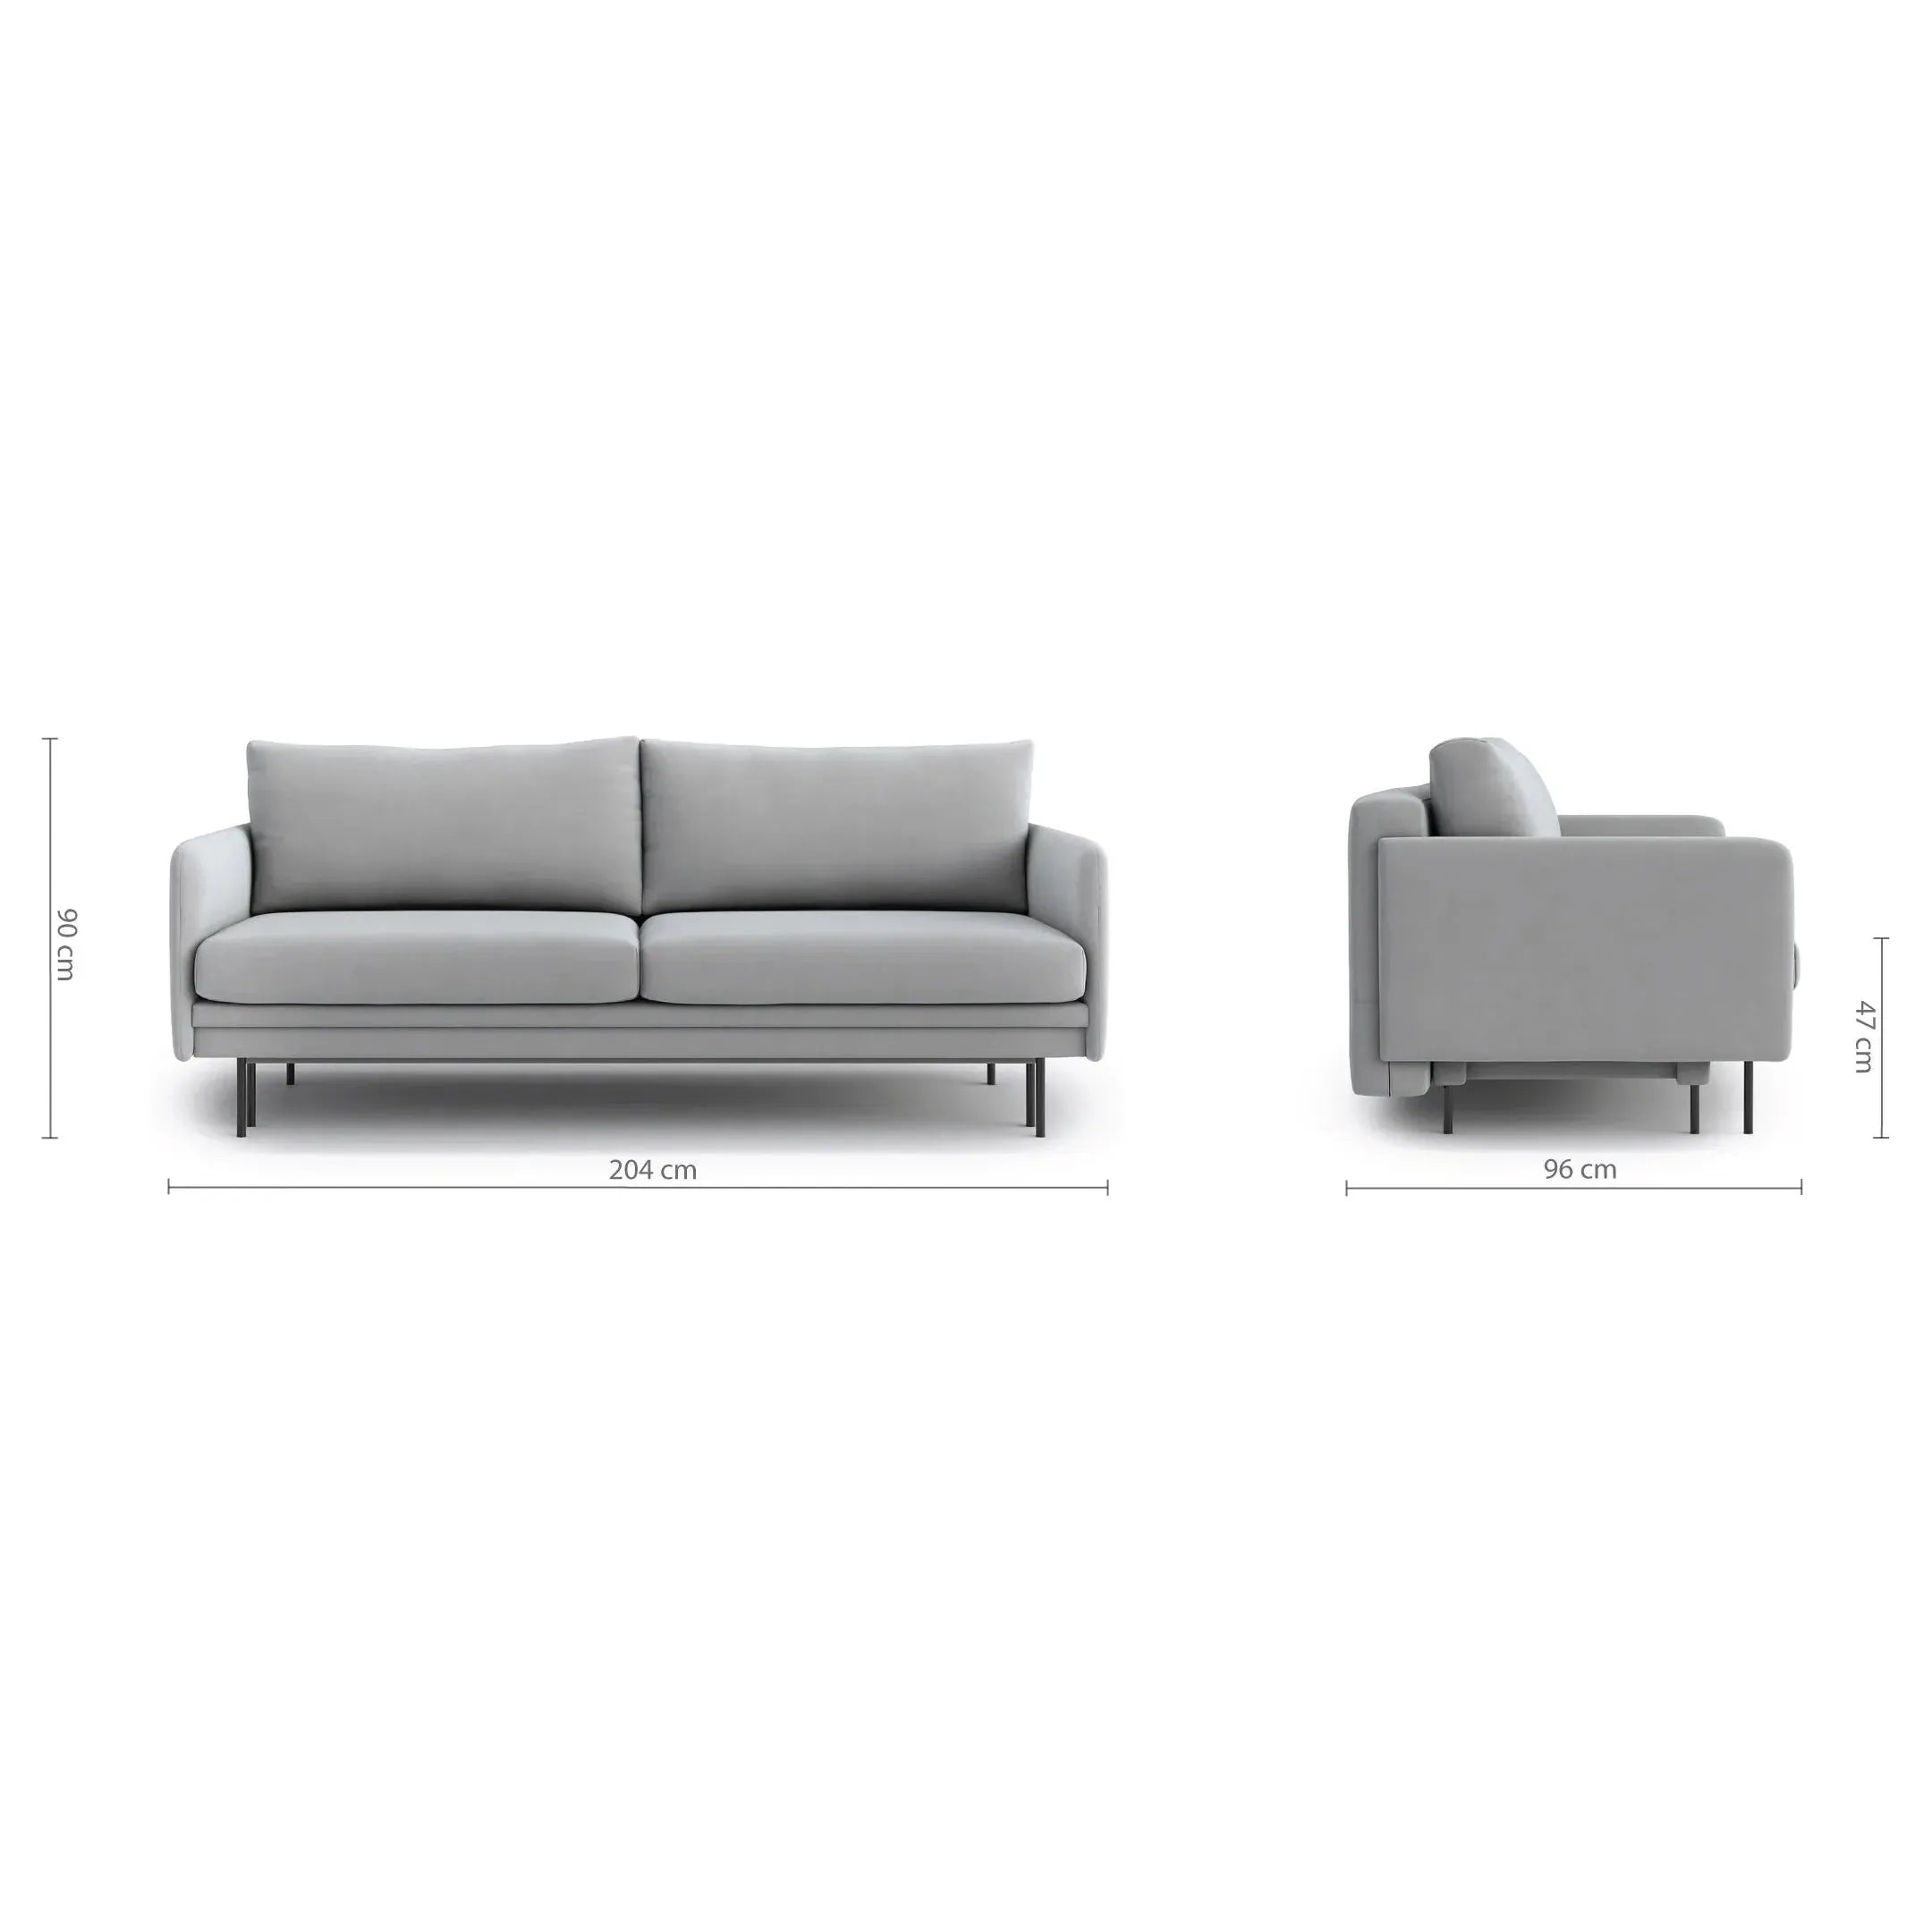 NORA 3 vietų sofa lova, pilka spalva